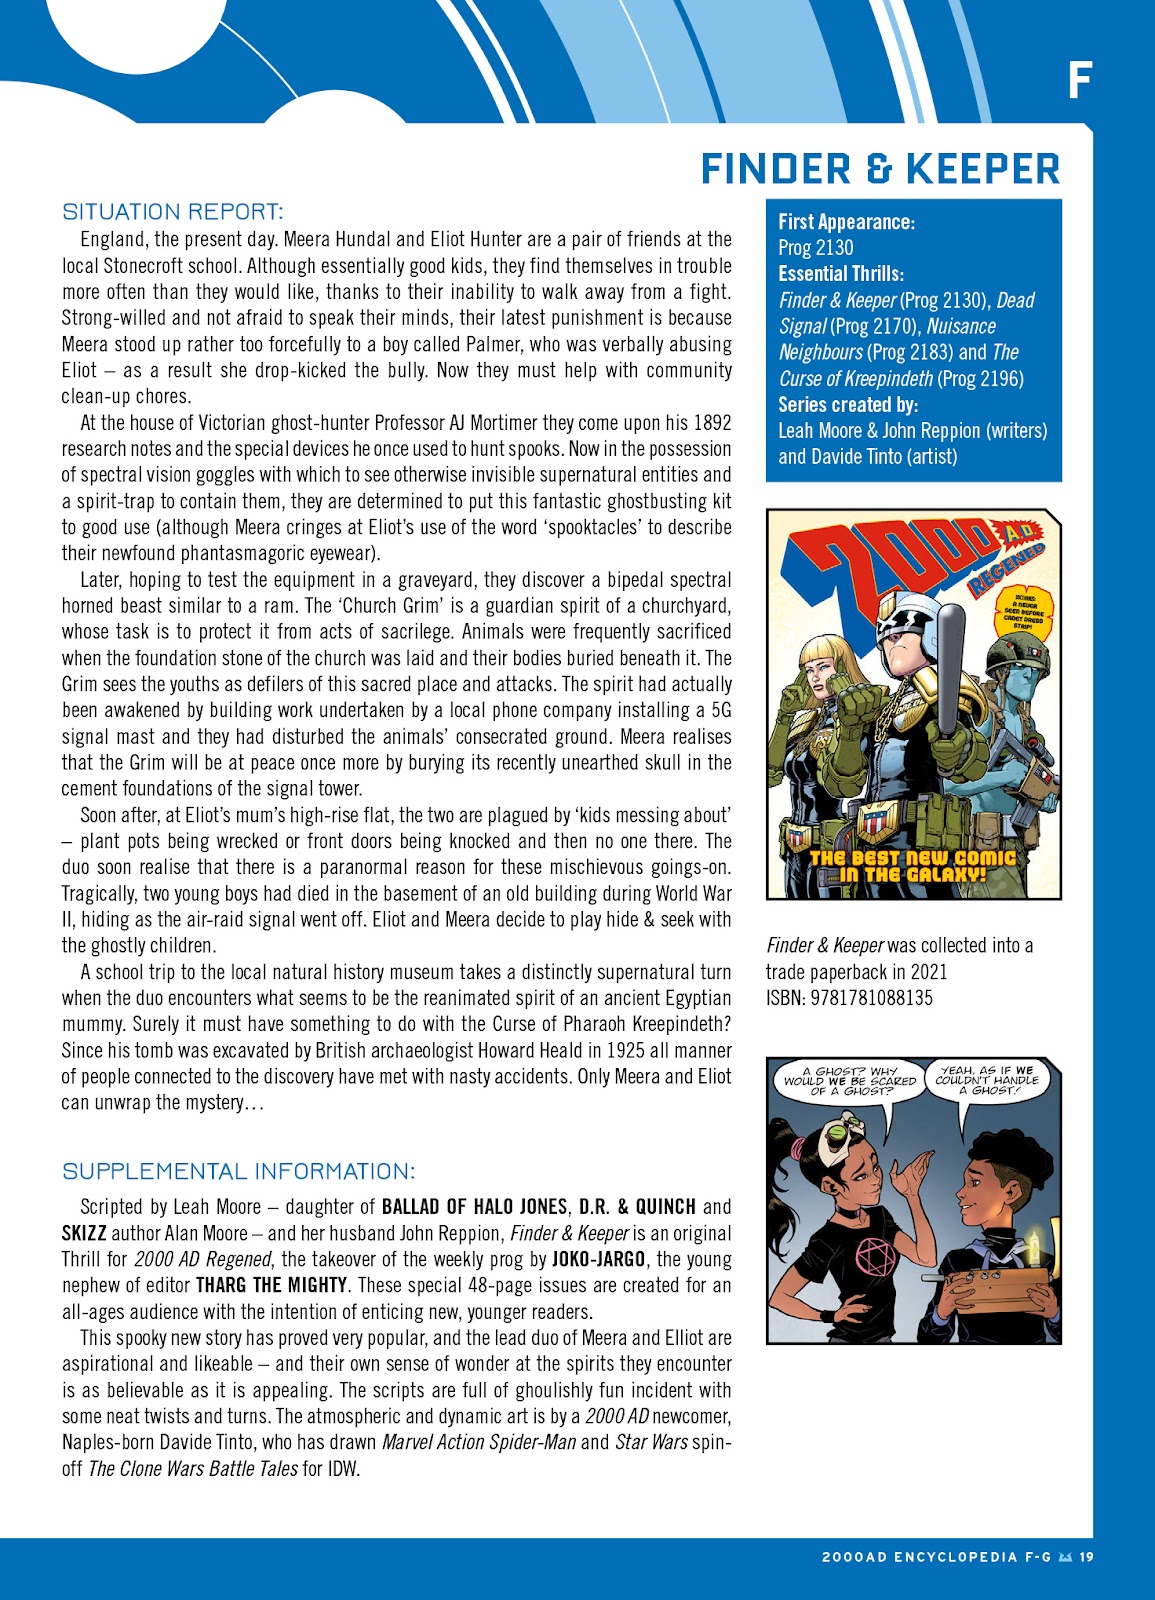 Judge Dredd Megazine (Vol. 5) issue 428 - Page 85